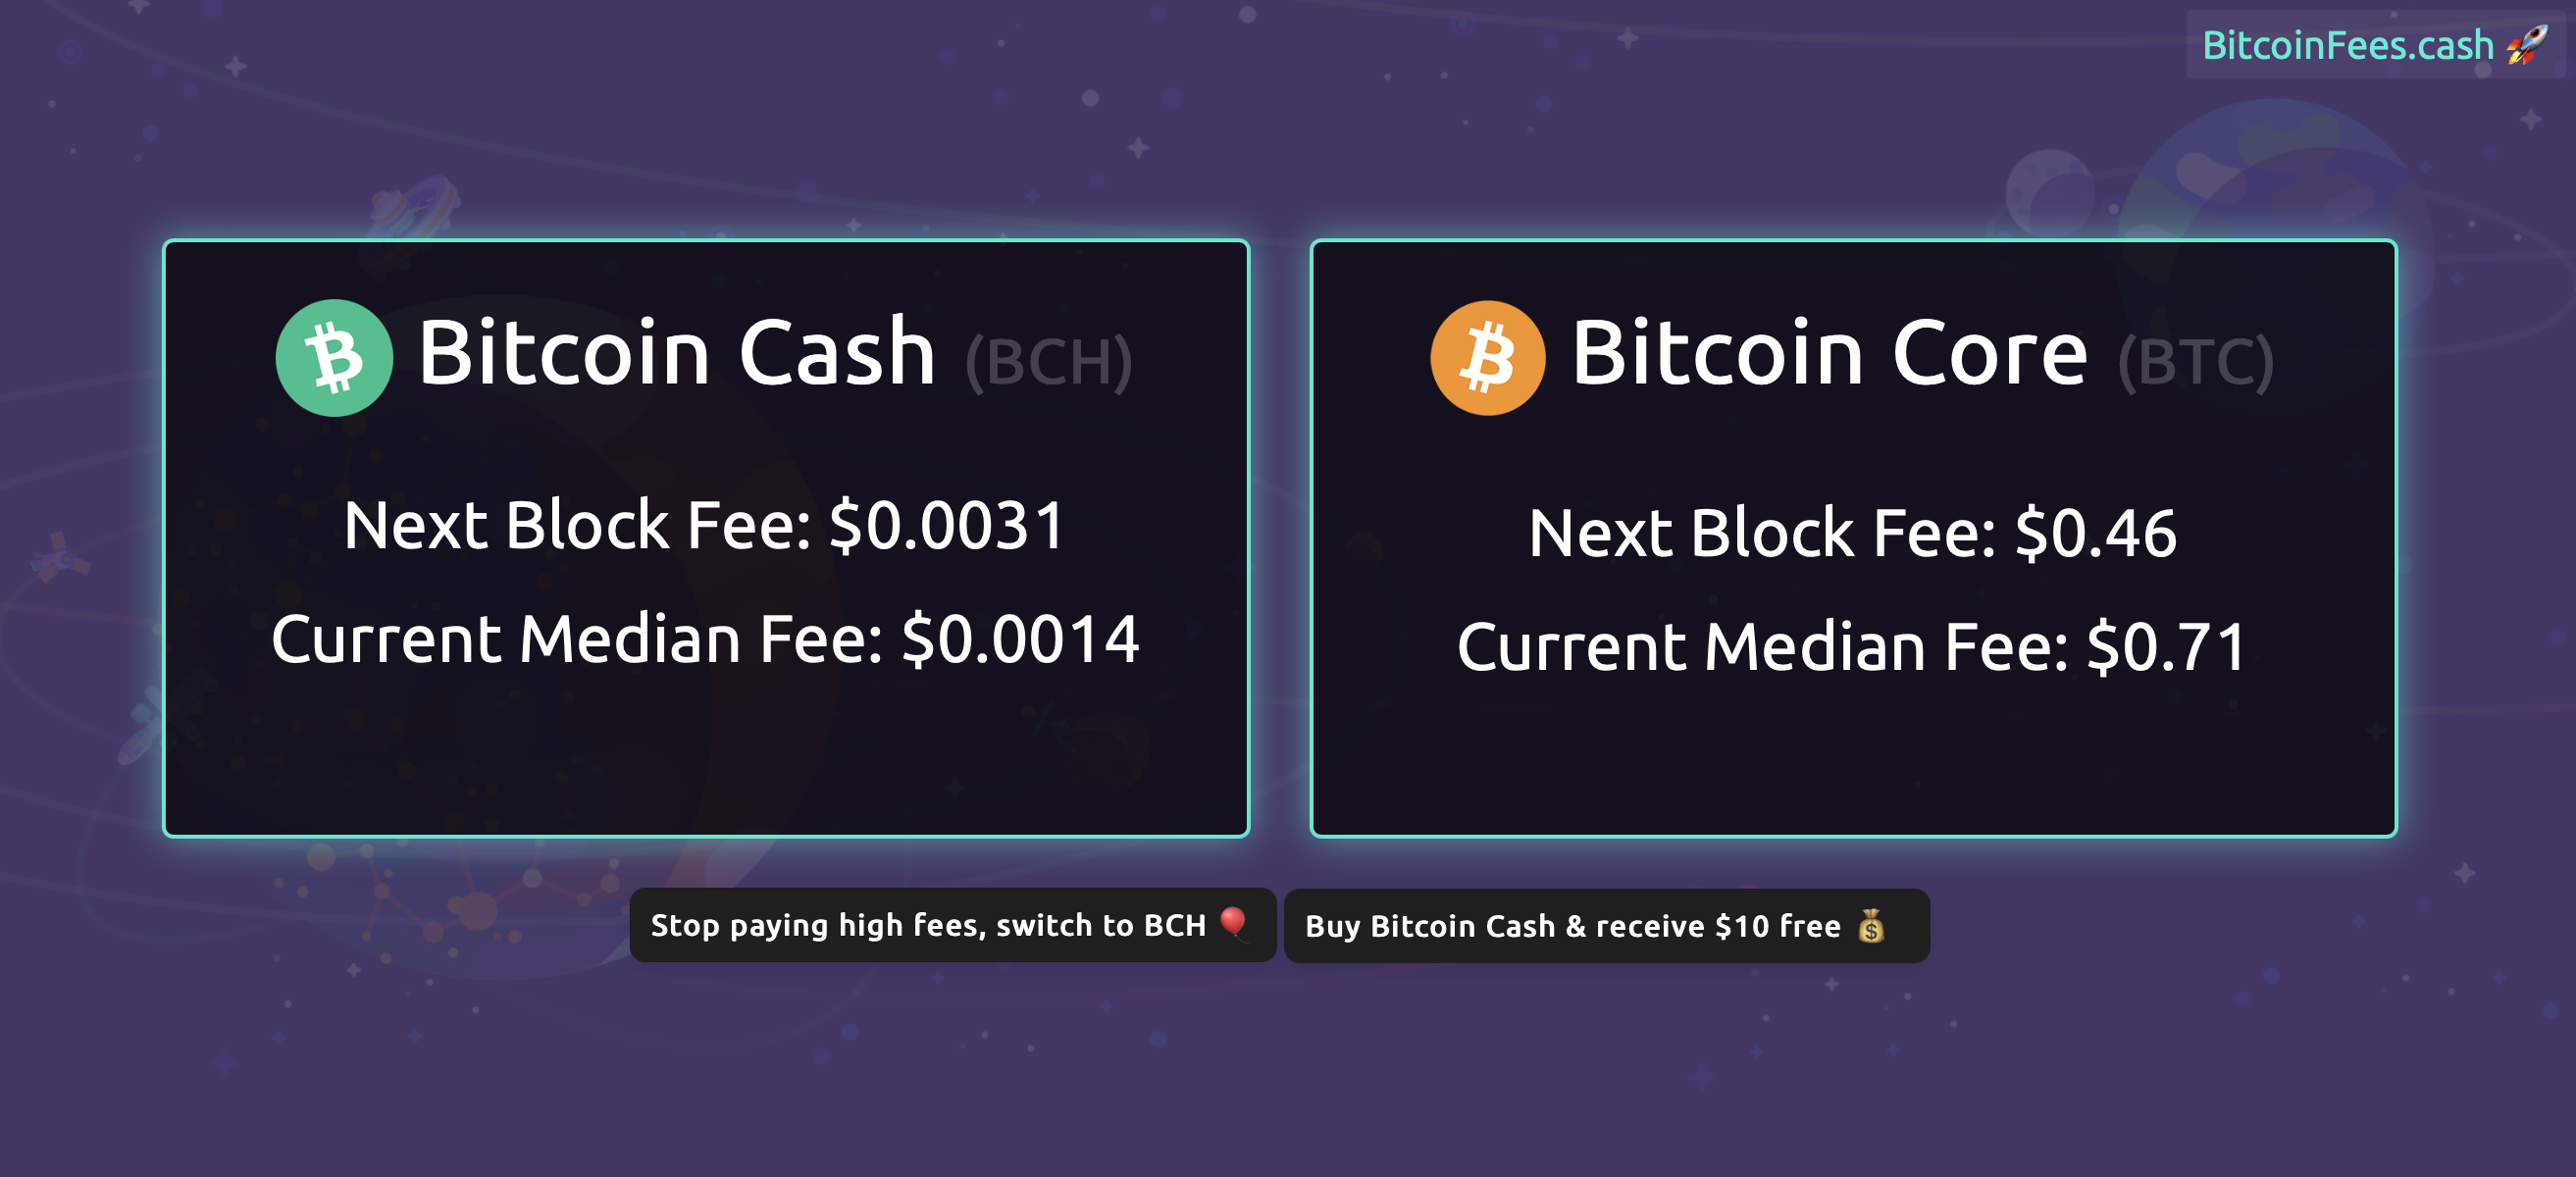 bitcoinfees.cash